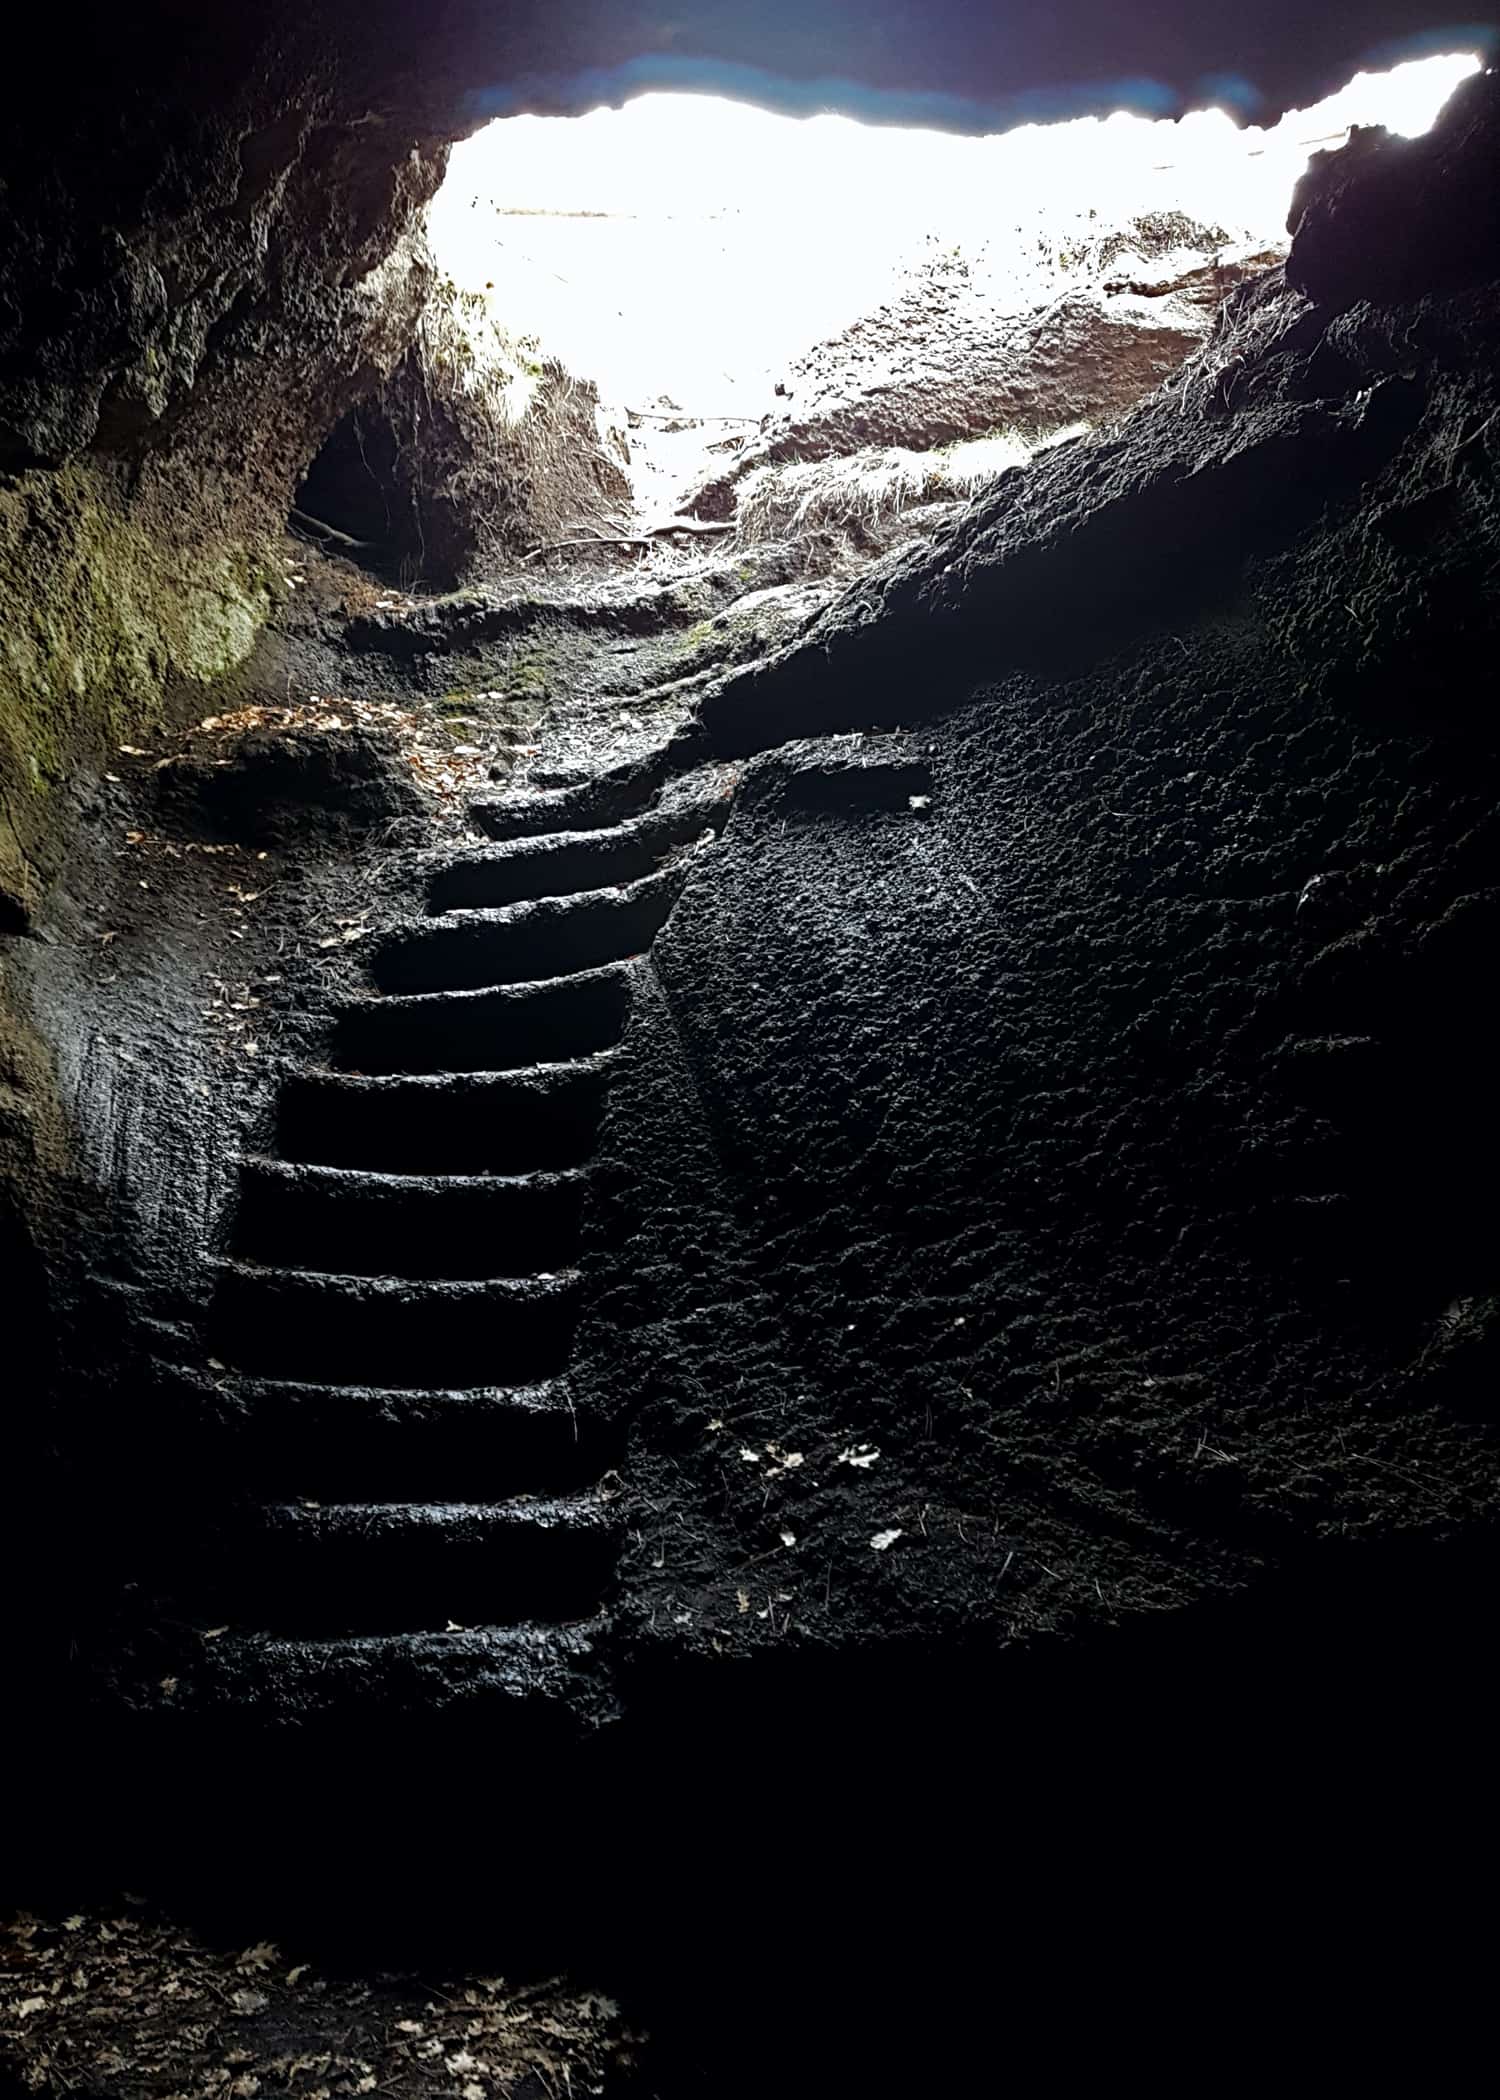 Scala grotta dei Ladroni